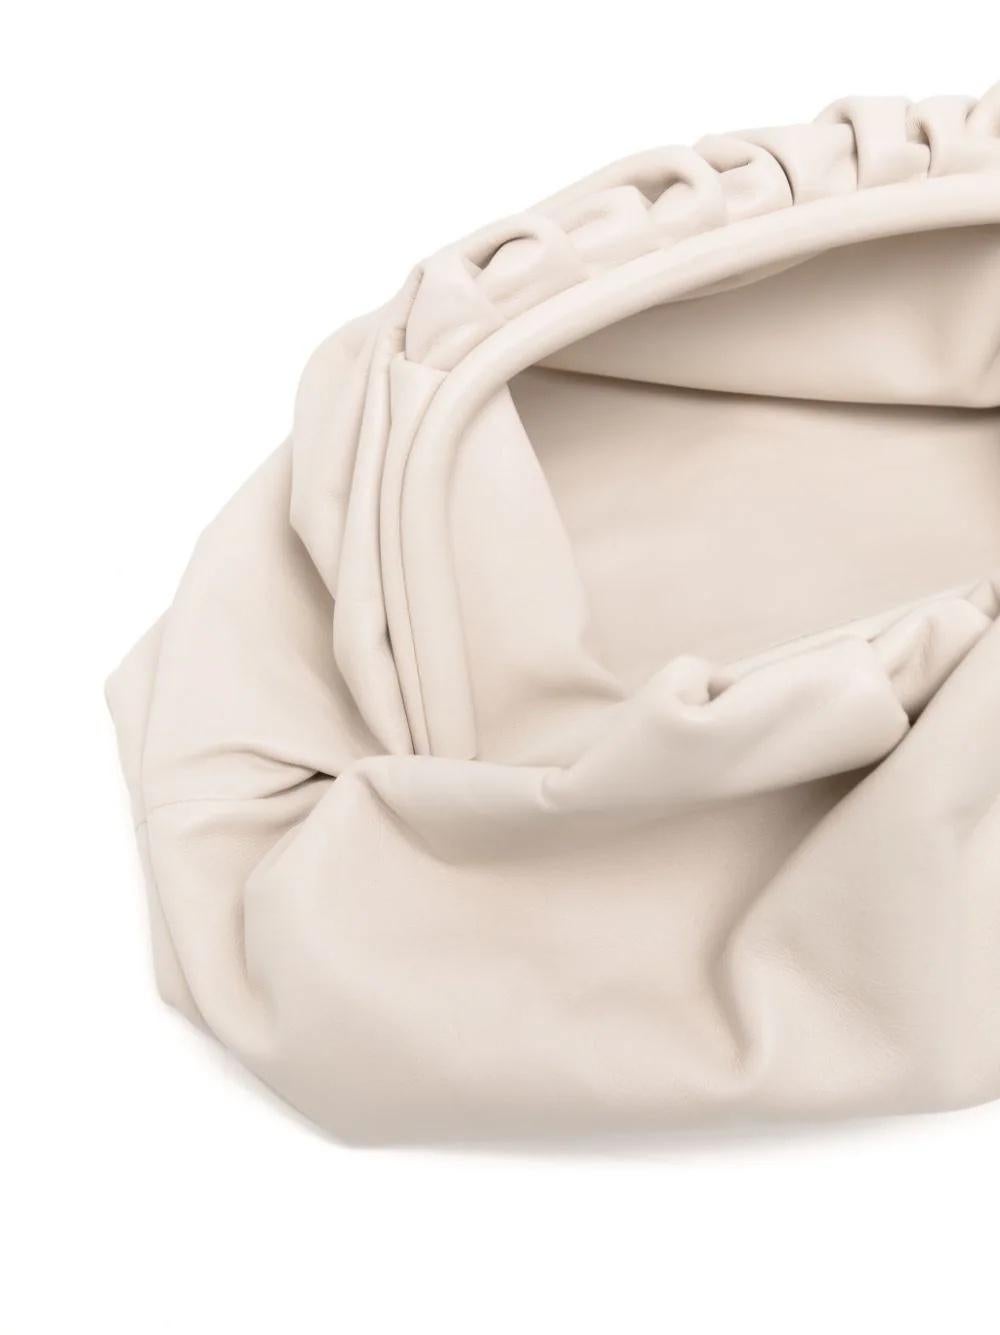 Bottega Veneta White Pouch Bag In Excellent Condition For Sale In London, GB